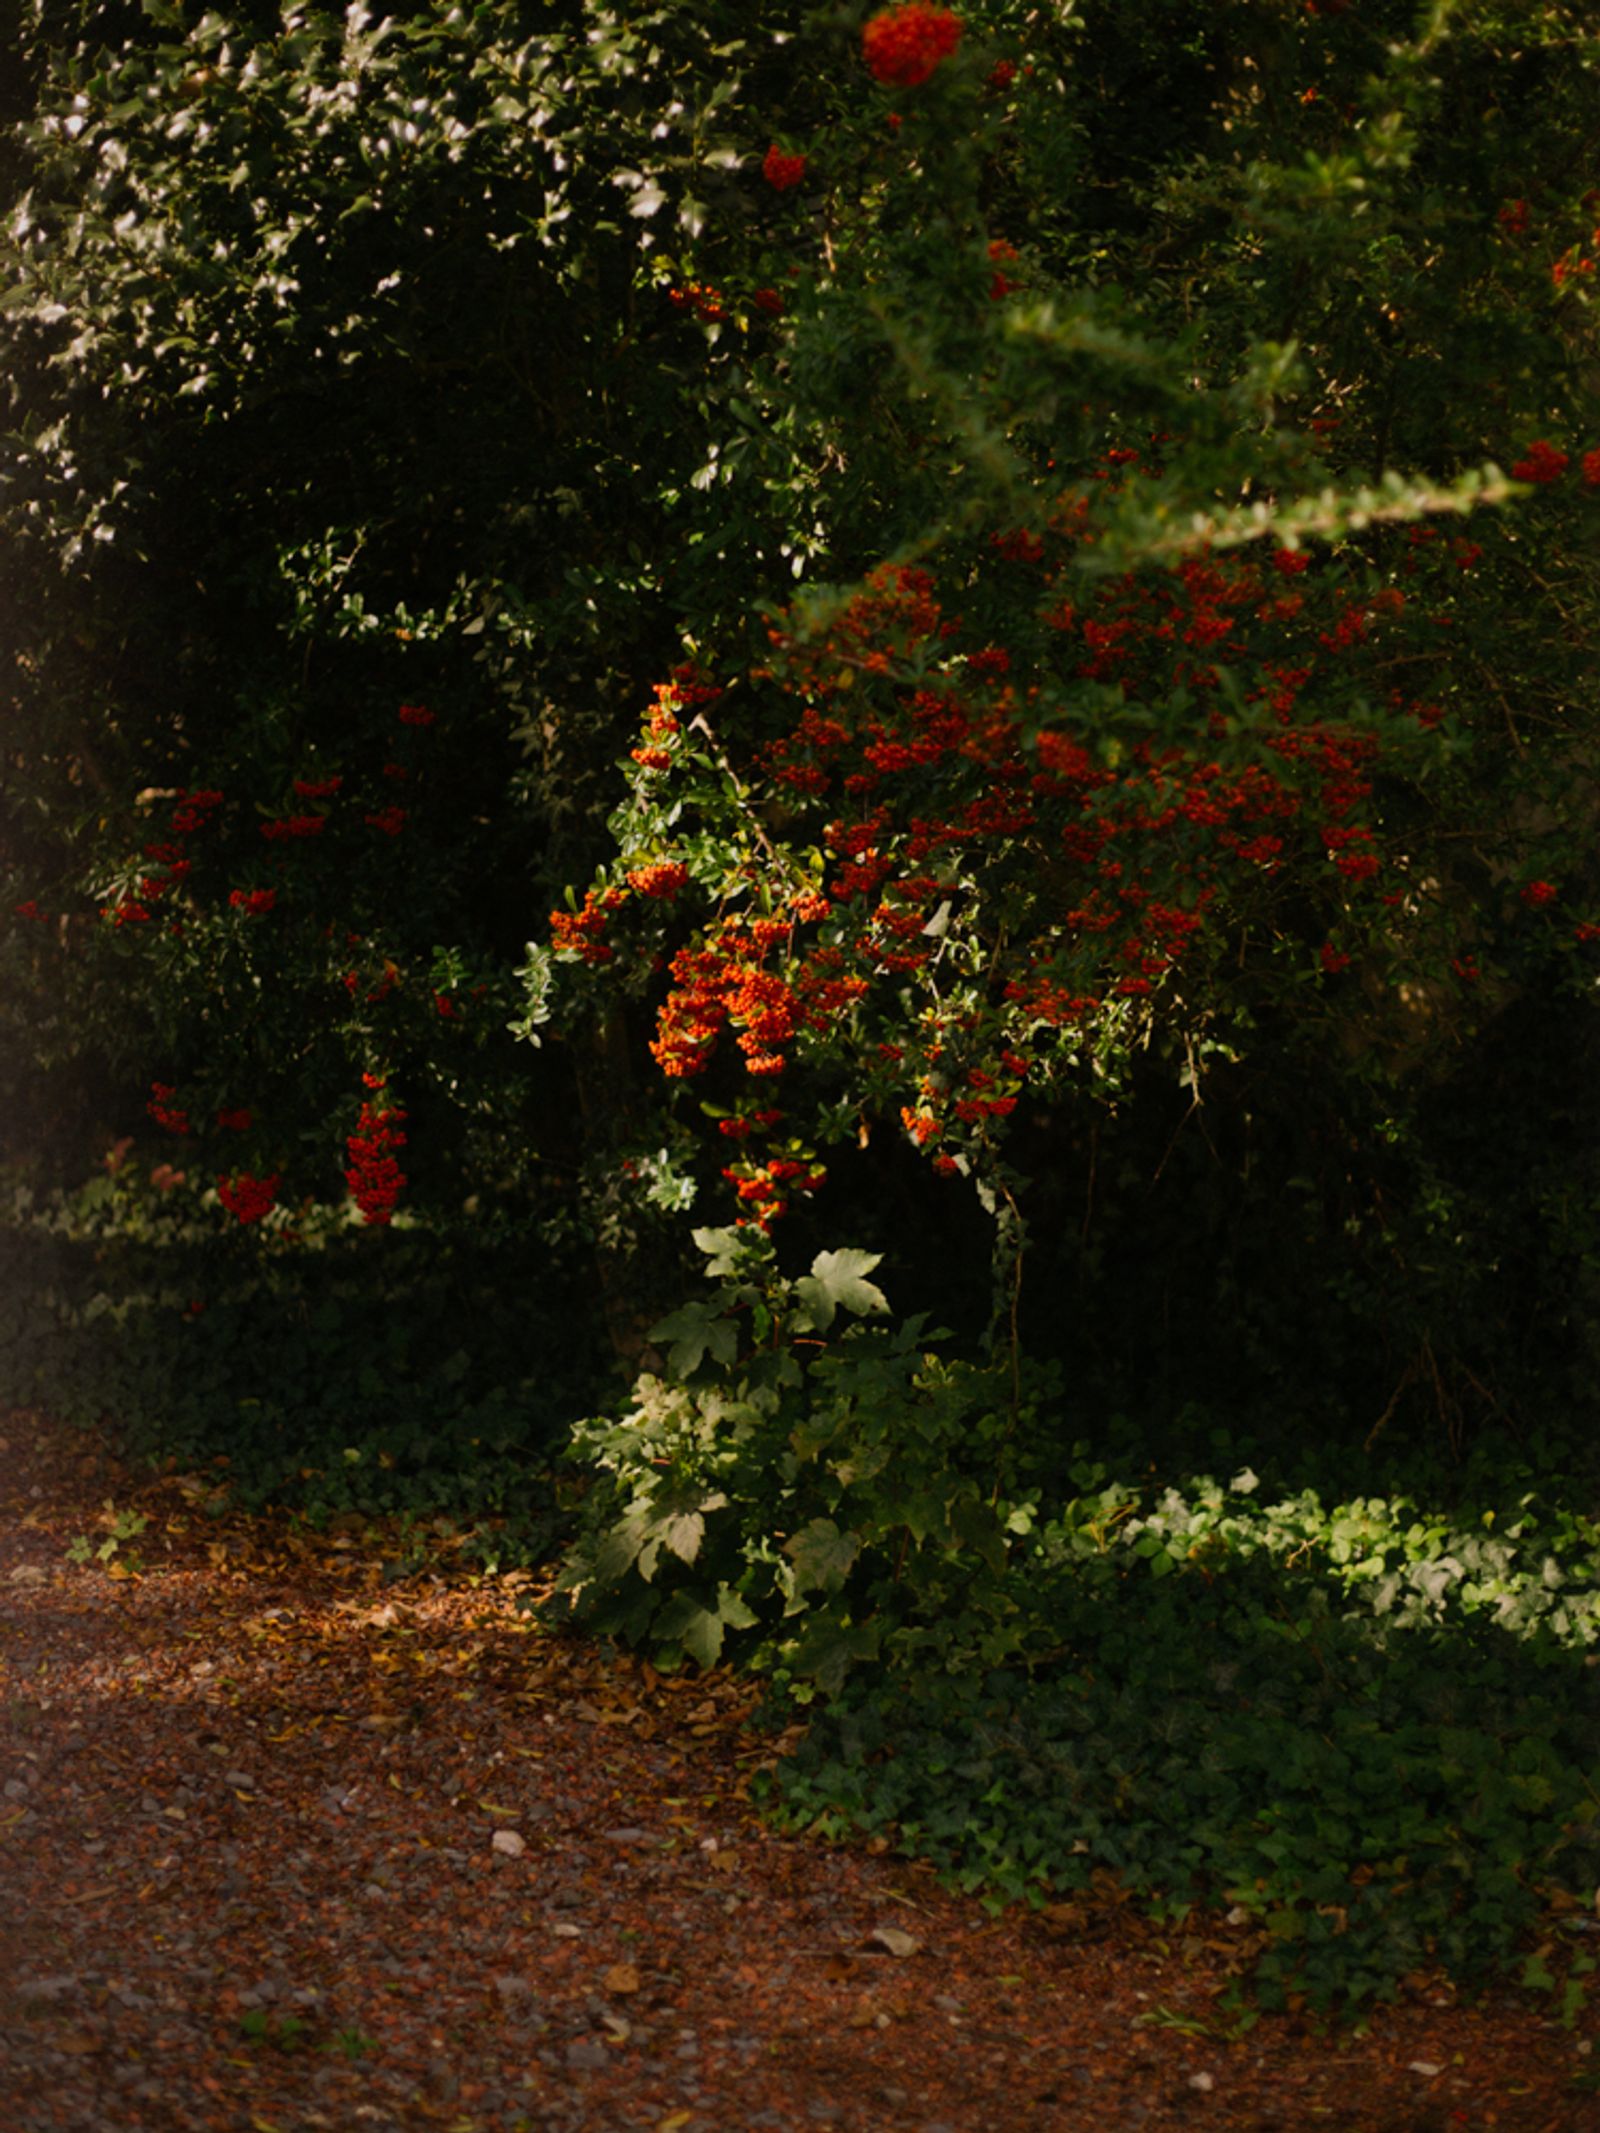 © Lea Franke - "Berry bush in the evening light"